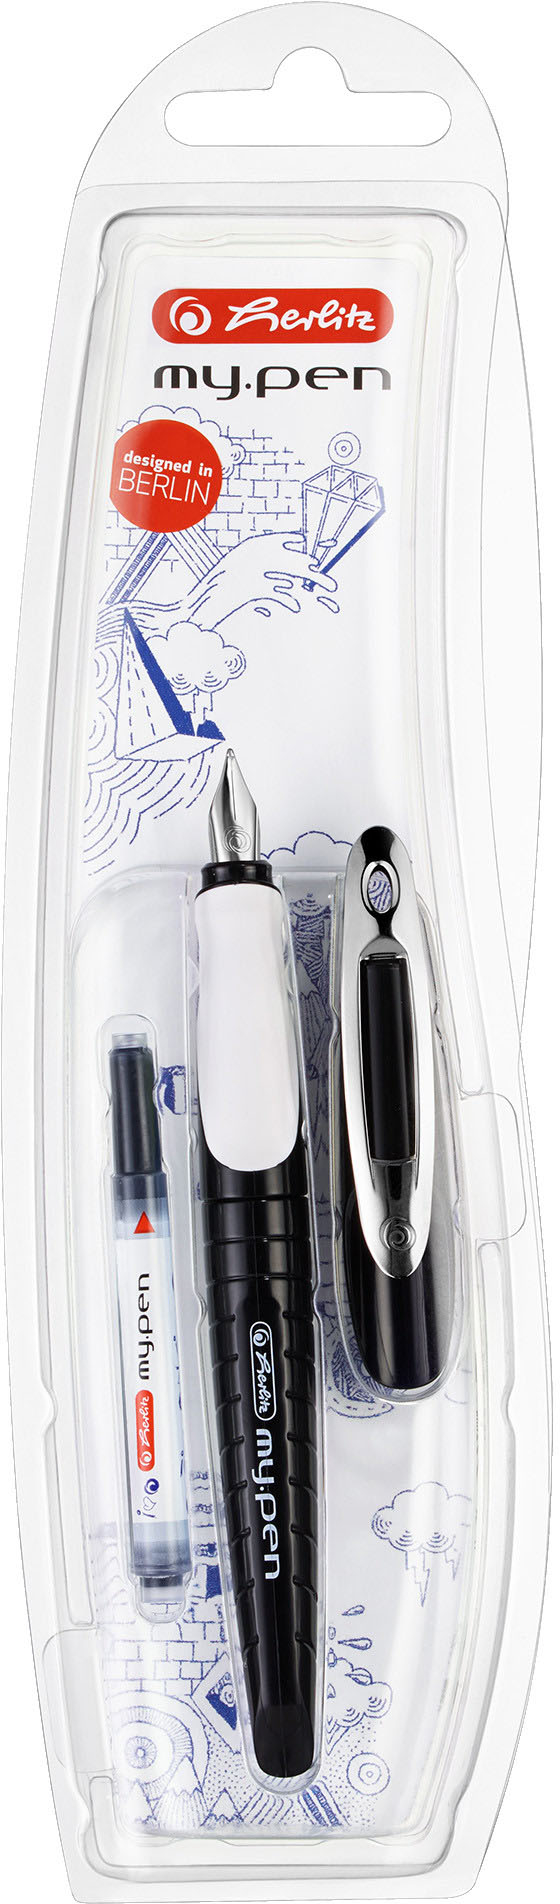 HERLITZ my.pen stylo plume M 10999746 Noir/Blanc Noir/Blanc